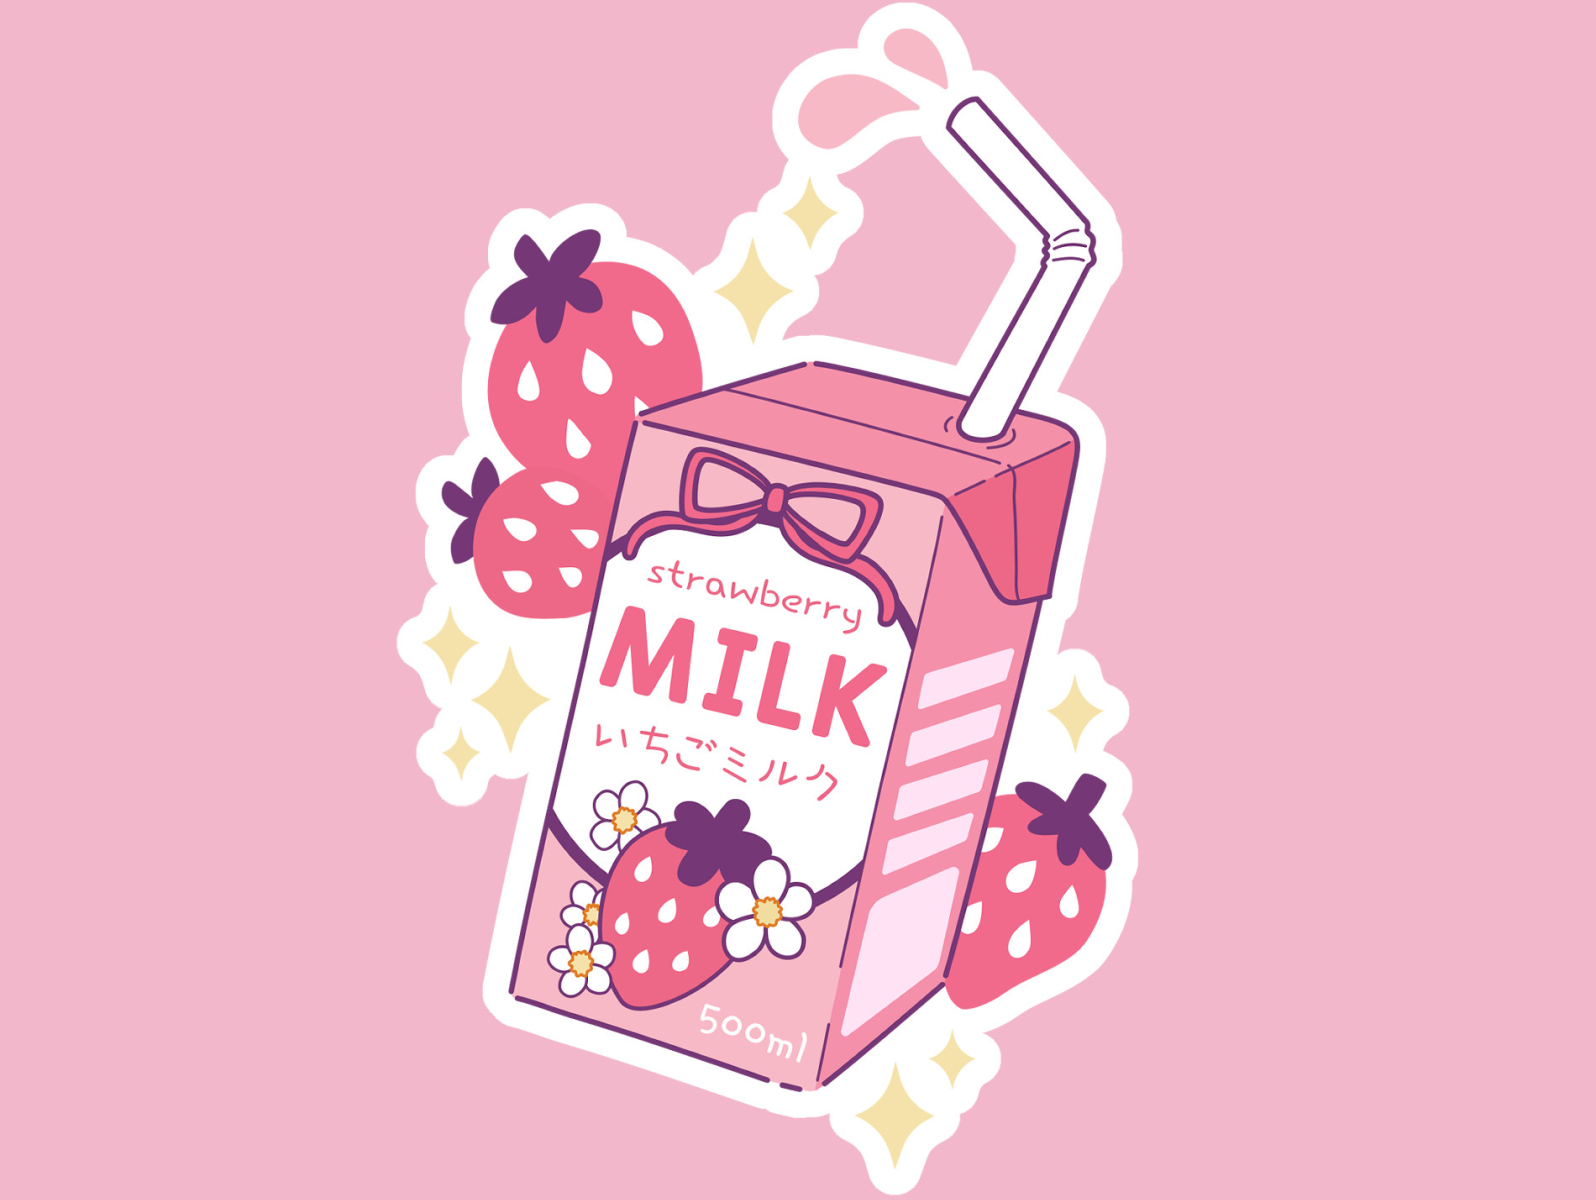 Summer Fruit Strawberry Milk Background Wallpaper Image For Free Download   Pngtree